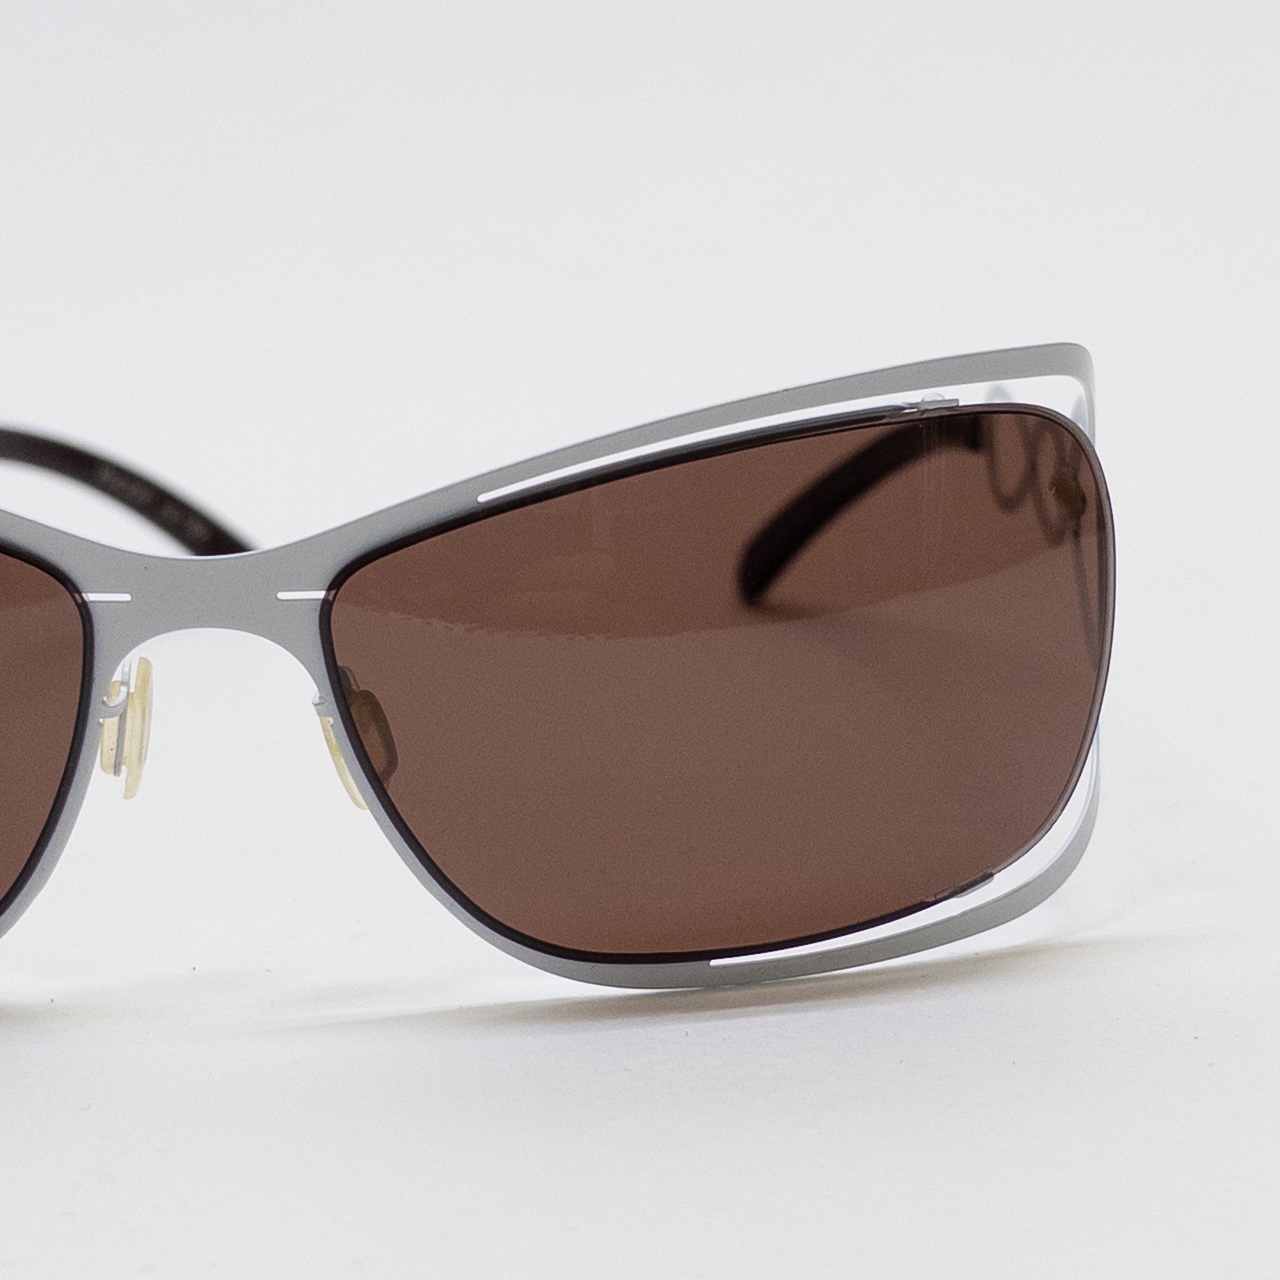 OVVO Optics Featherweirght Sunglasses